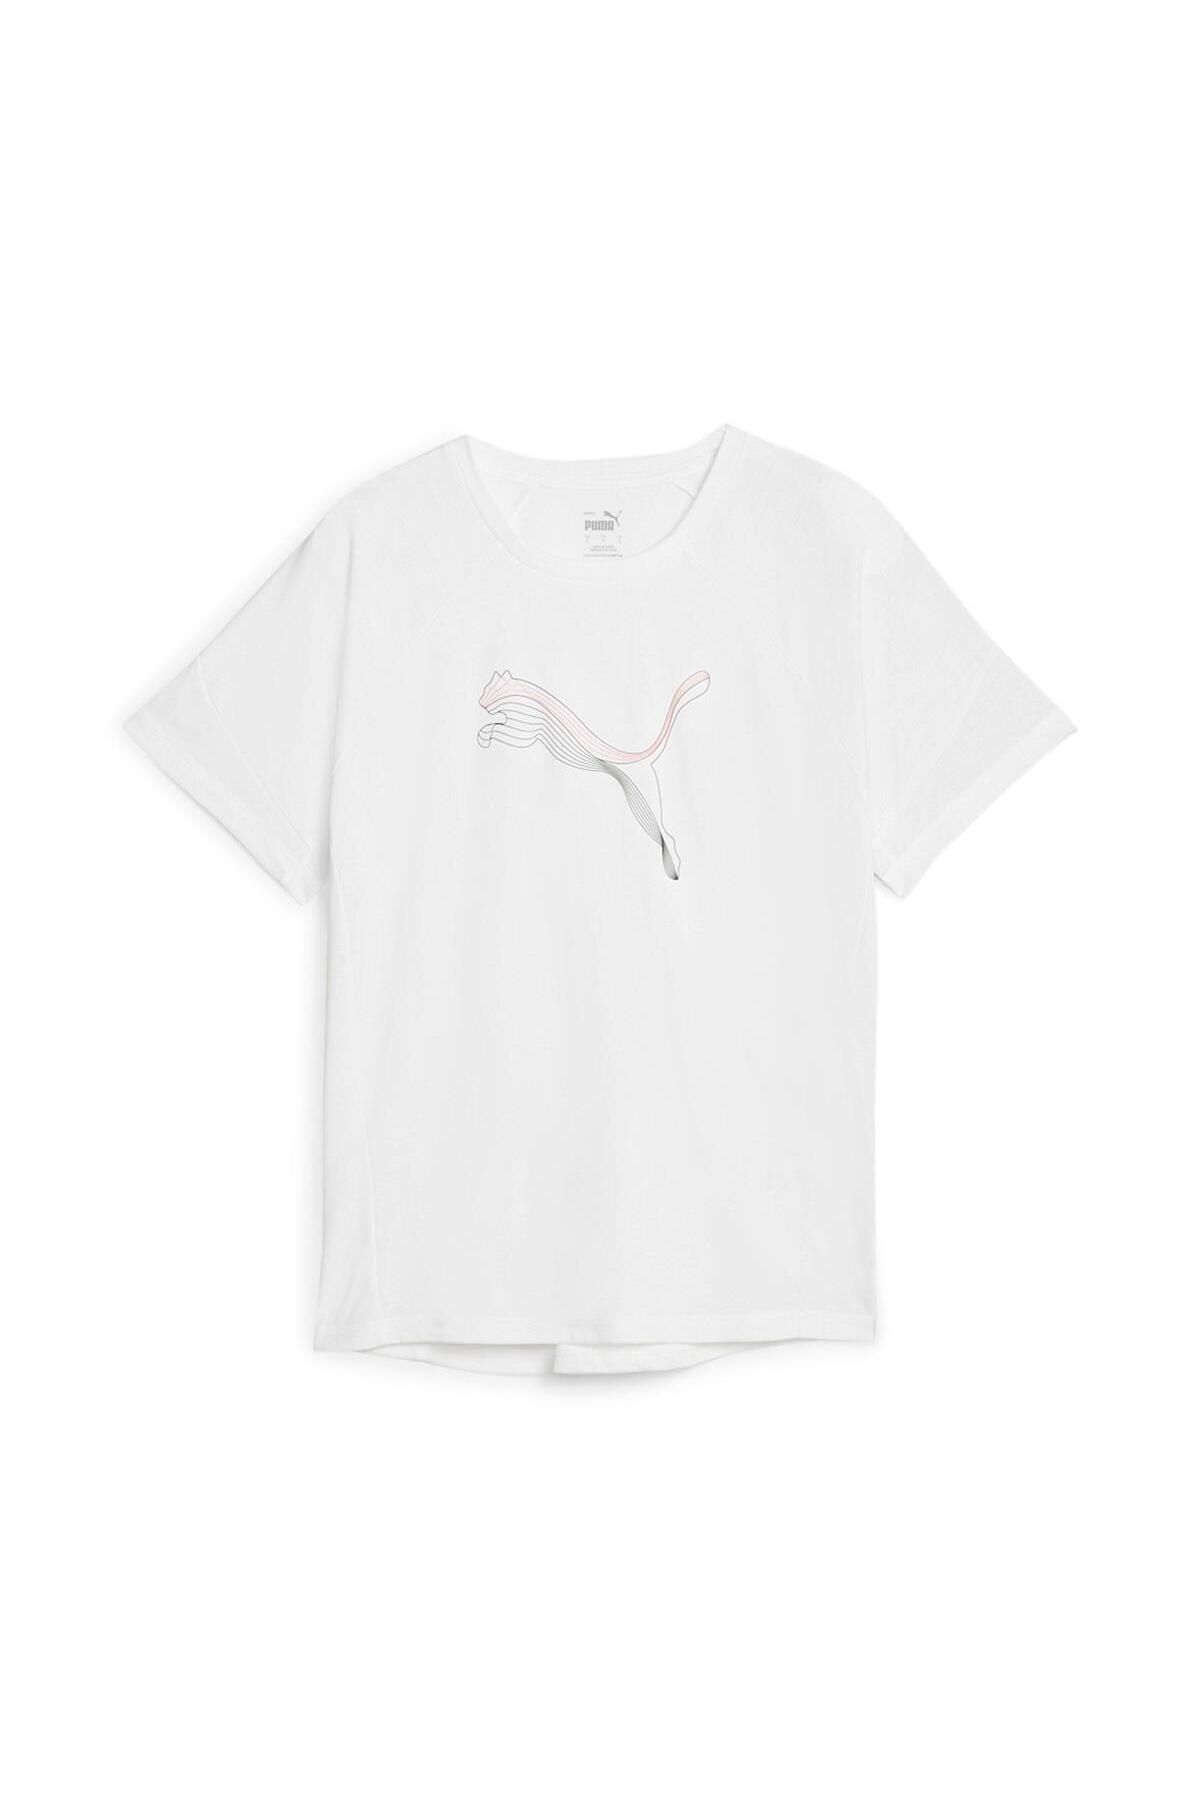 Puma Evostripe Tee Kadın T-shirt